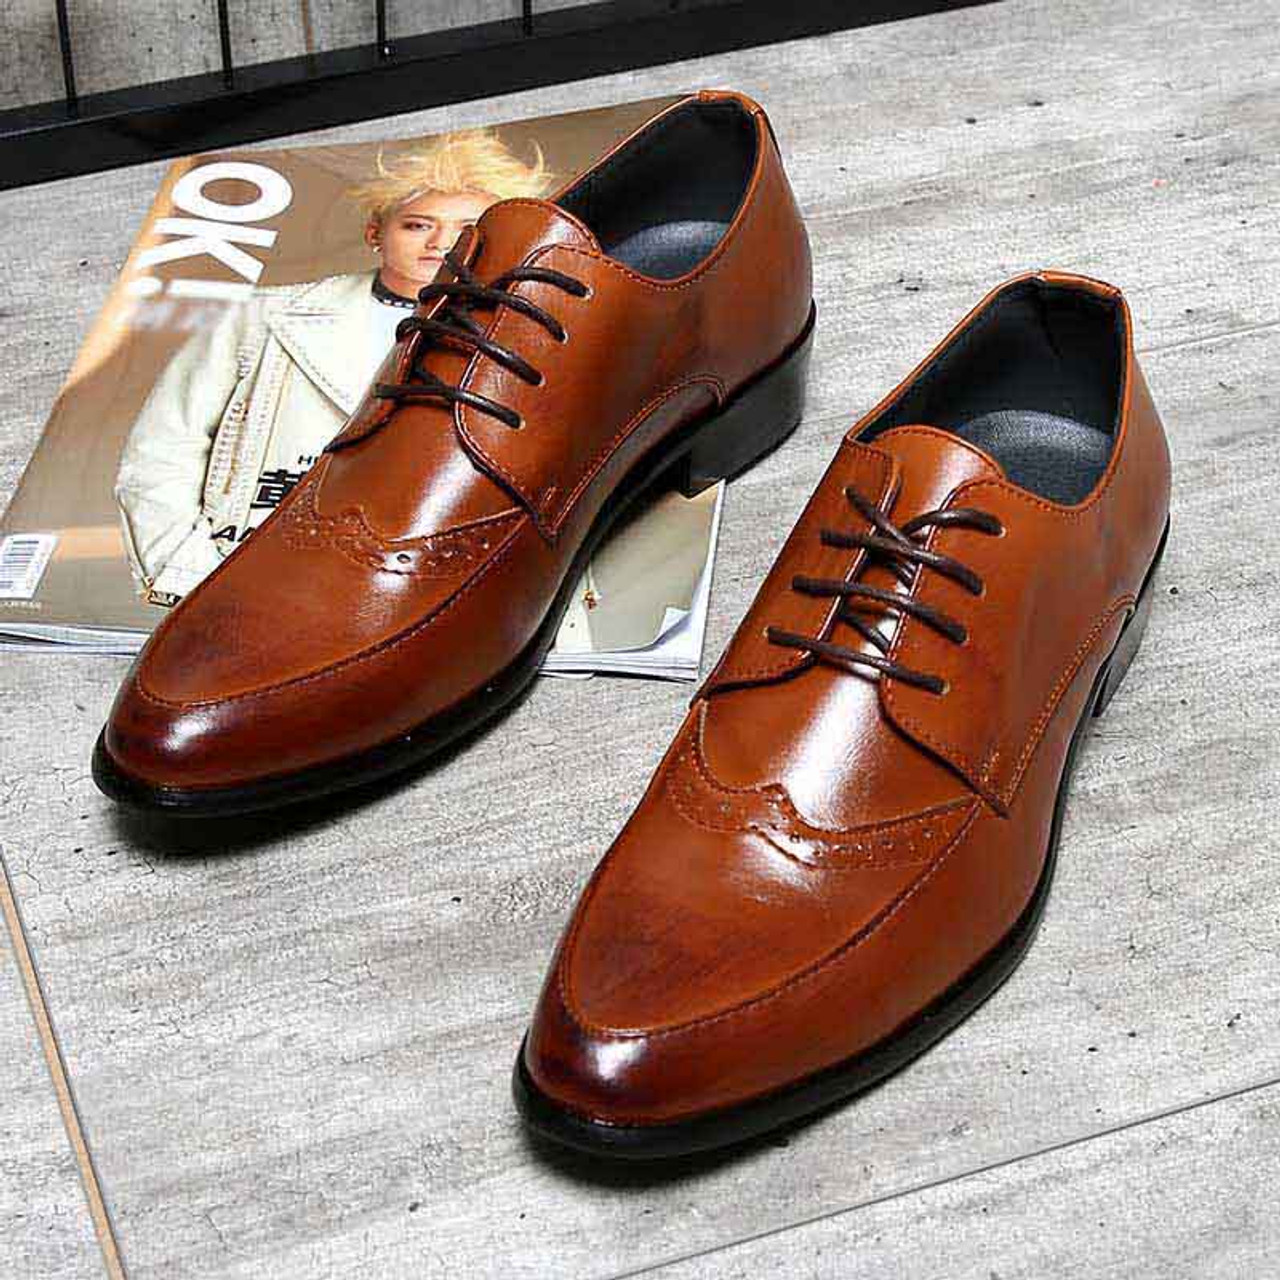 Brown retro brogue leather derby dress shoe | Mens dress shoes online ...